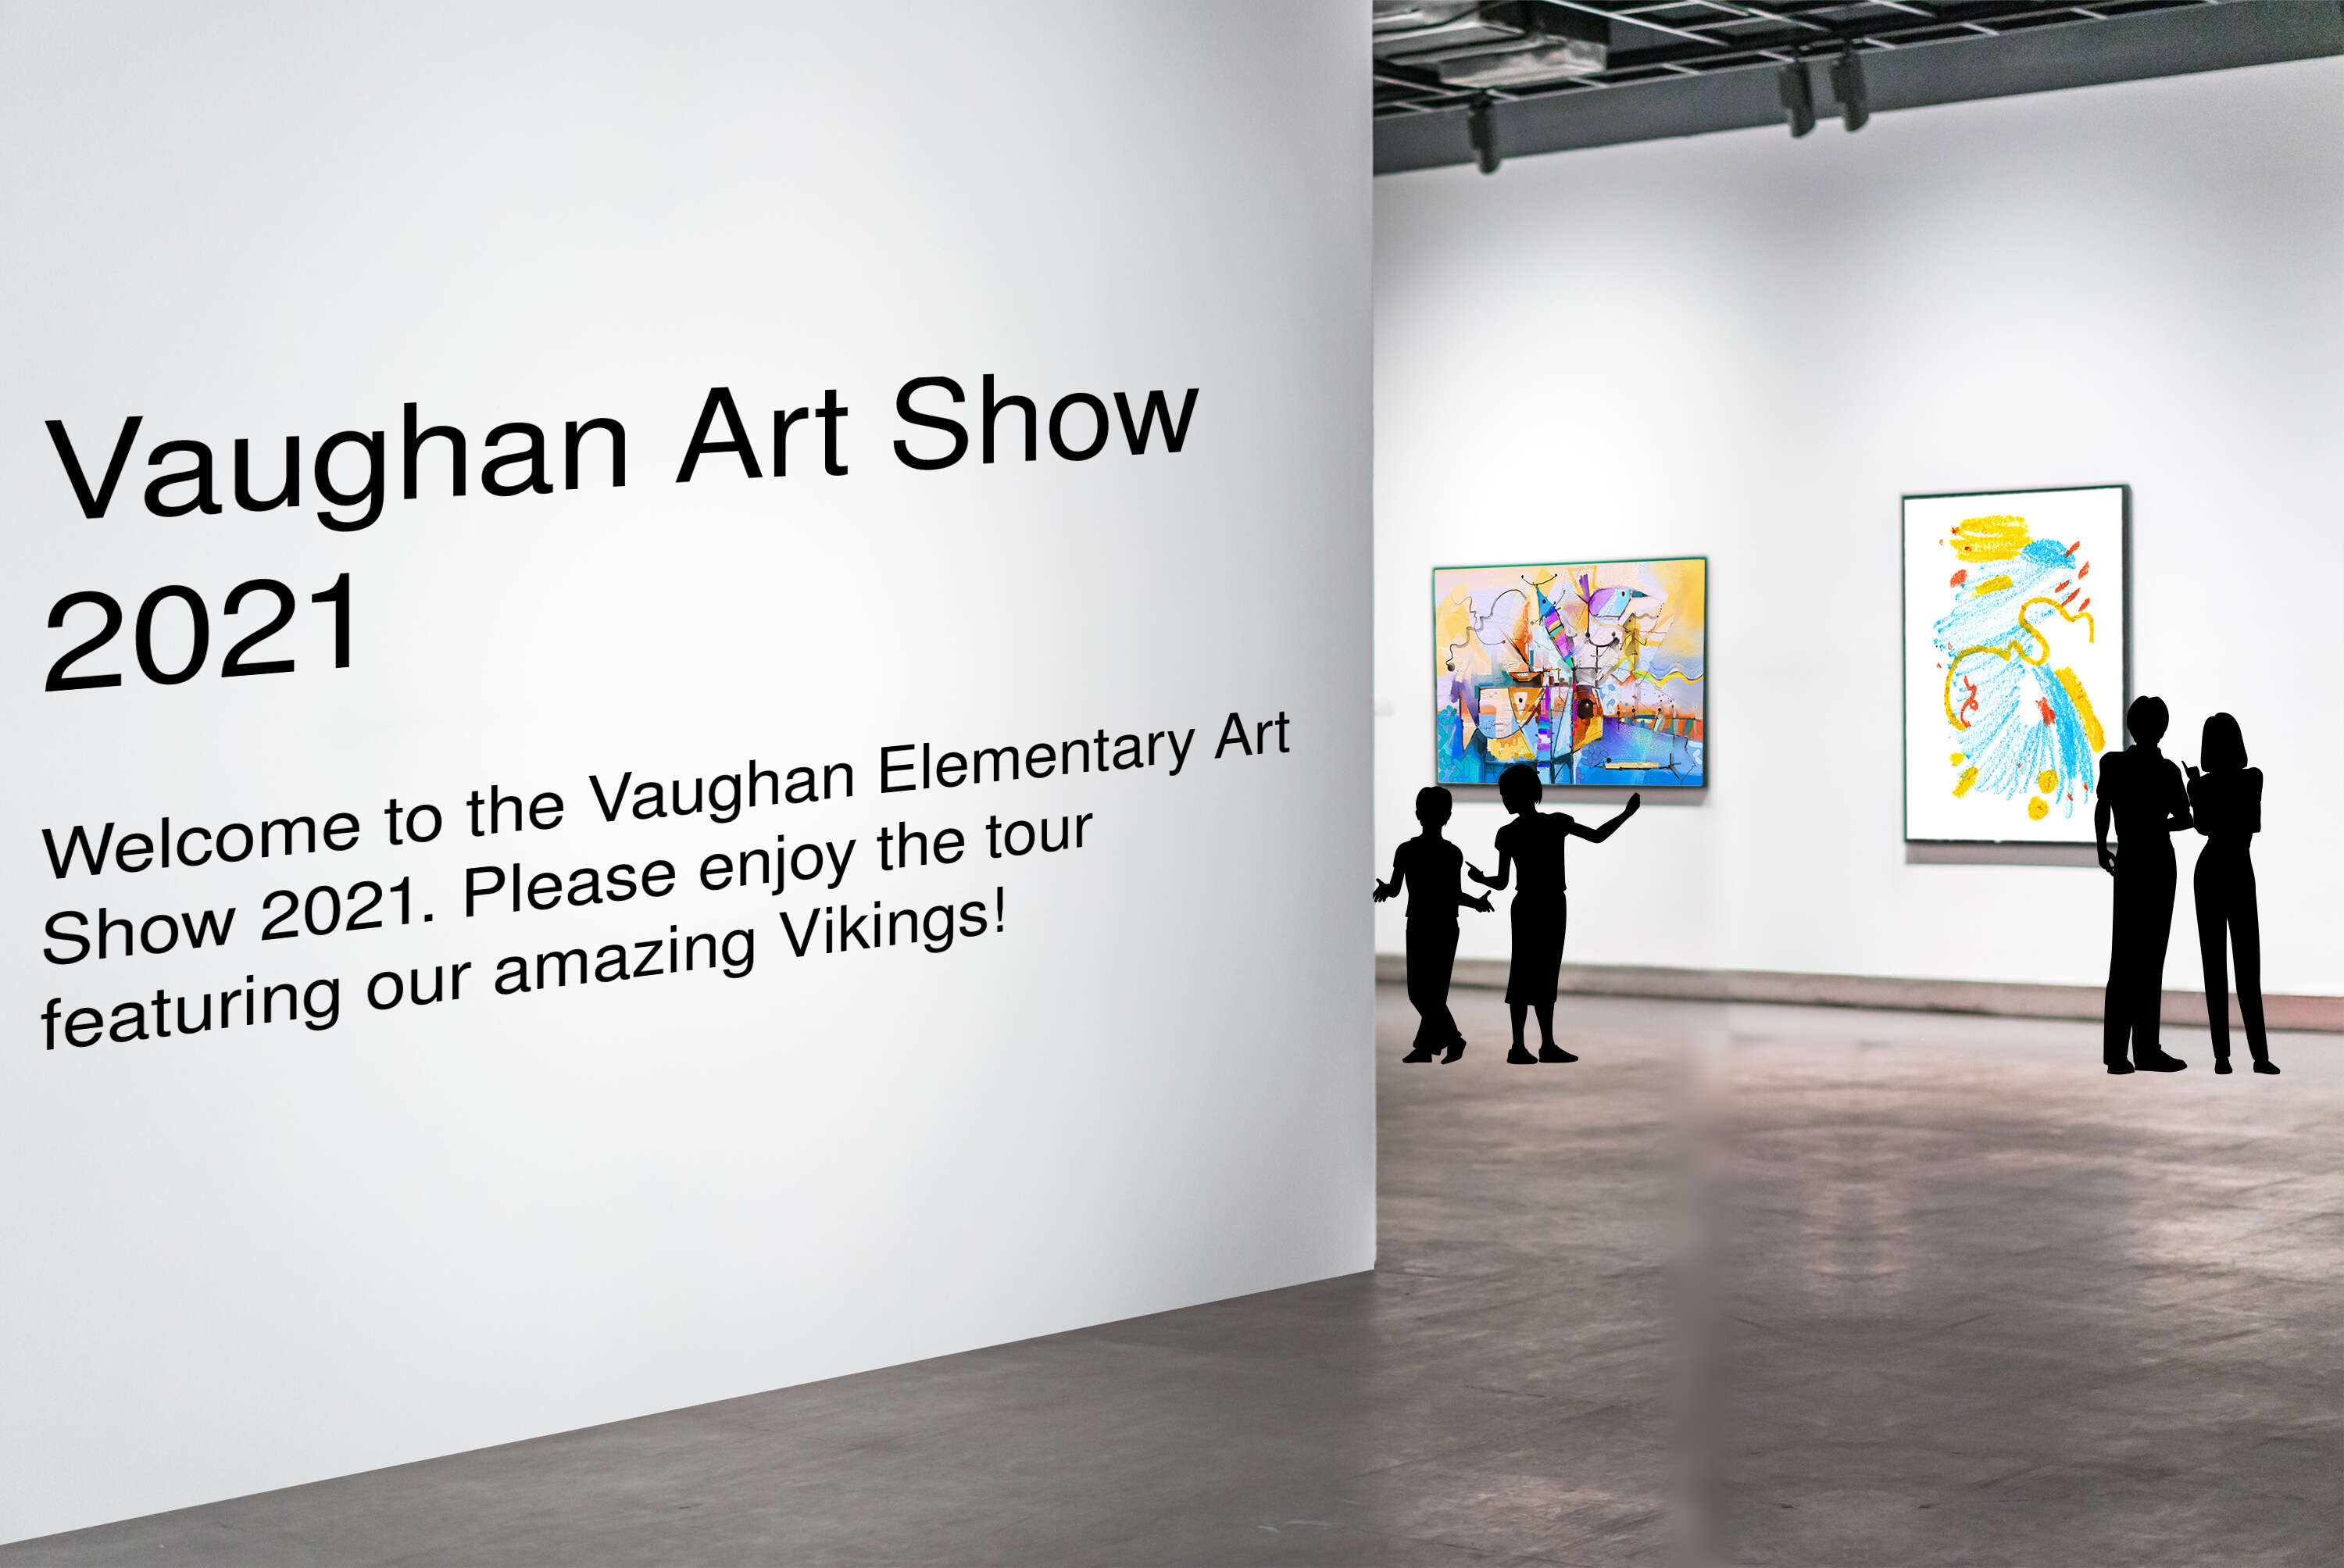 Vaughan Art Show 2021